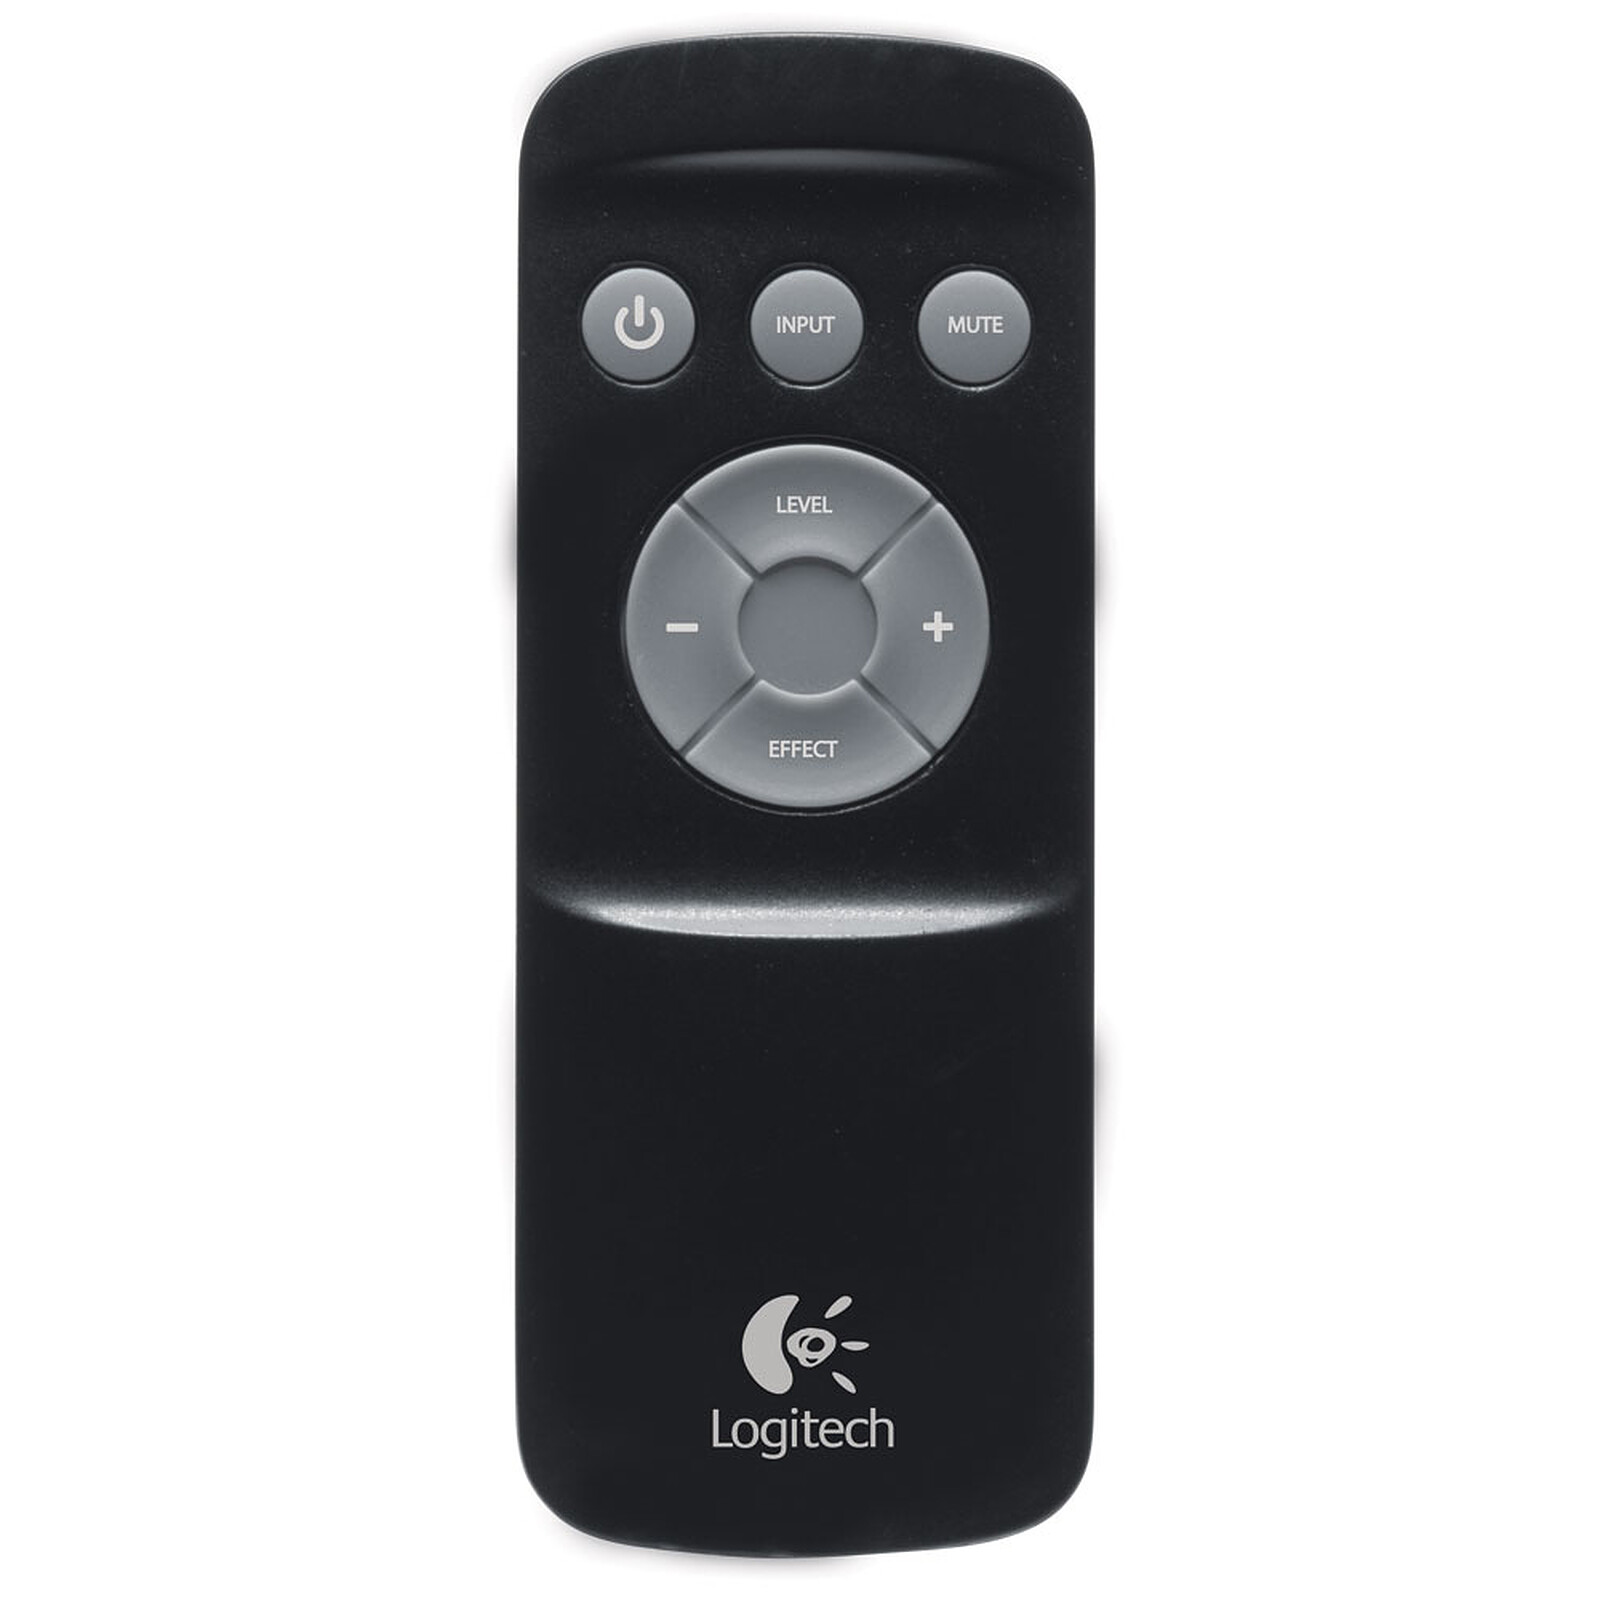 Logitech Multimedia Speakers Z333 - Altavoces PC - LDLC